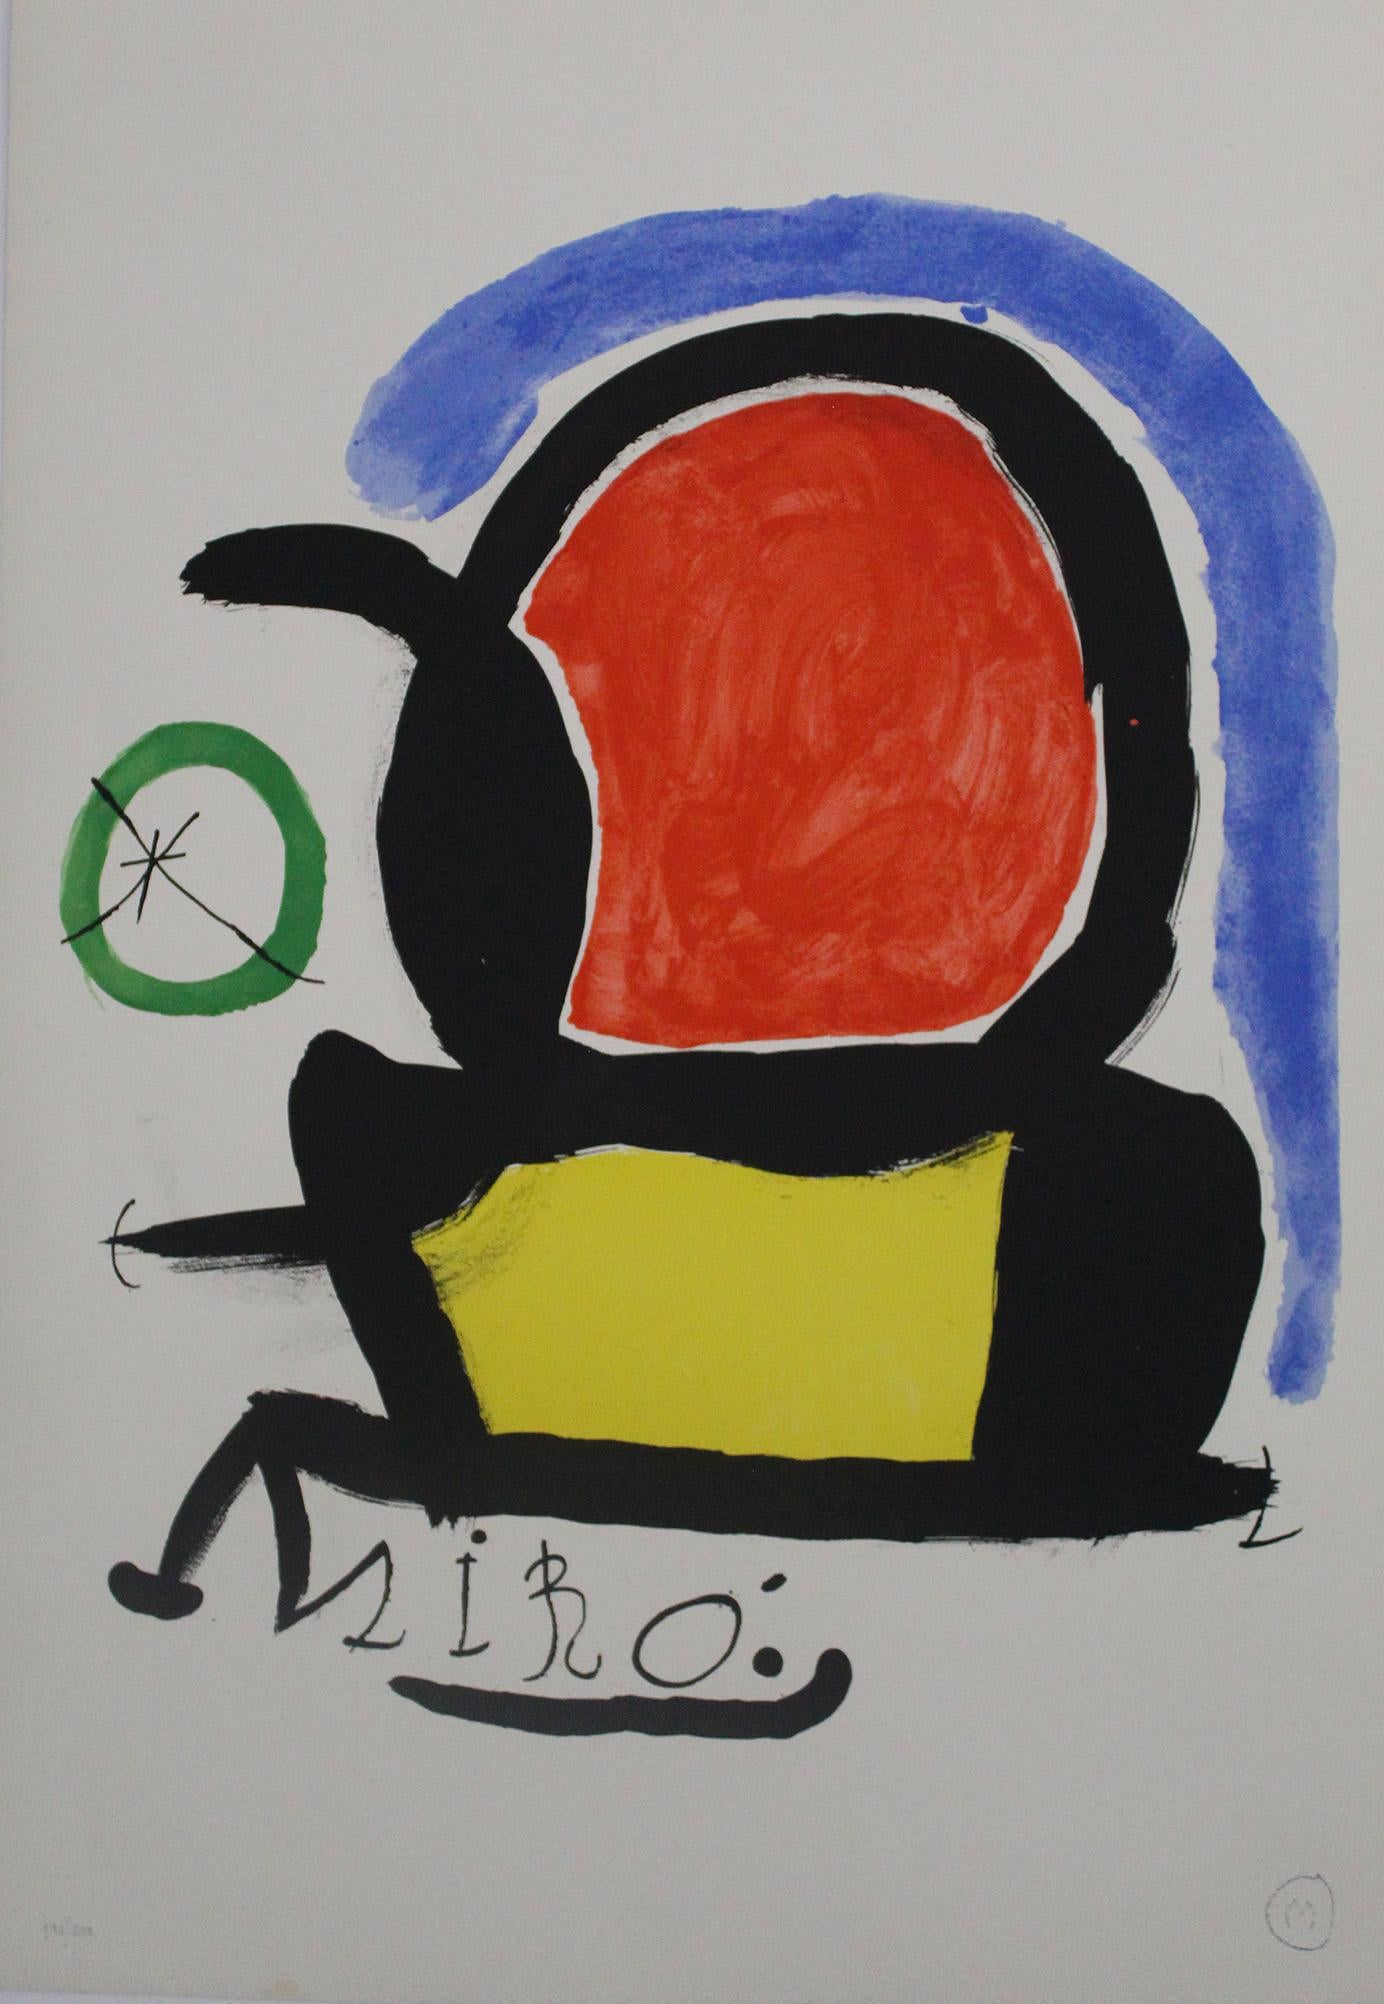 Joan Miró Abstract Print - Cartel para exposición Sala Gaspar, 1970